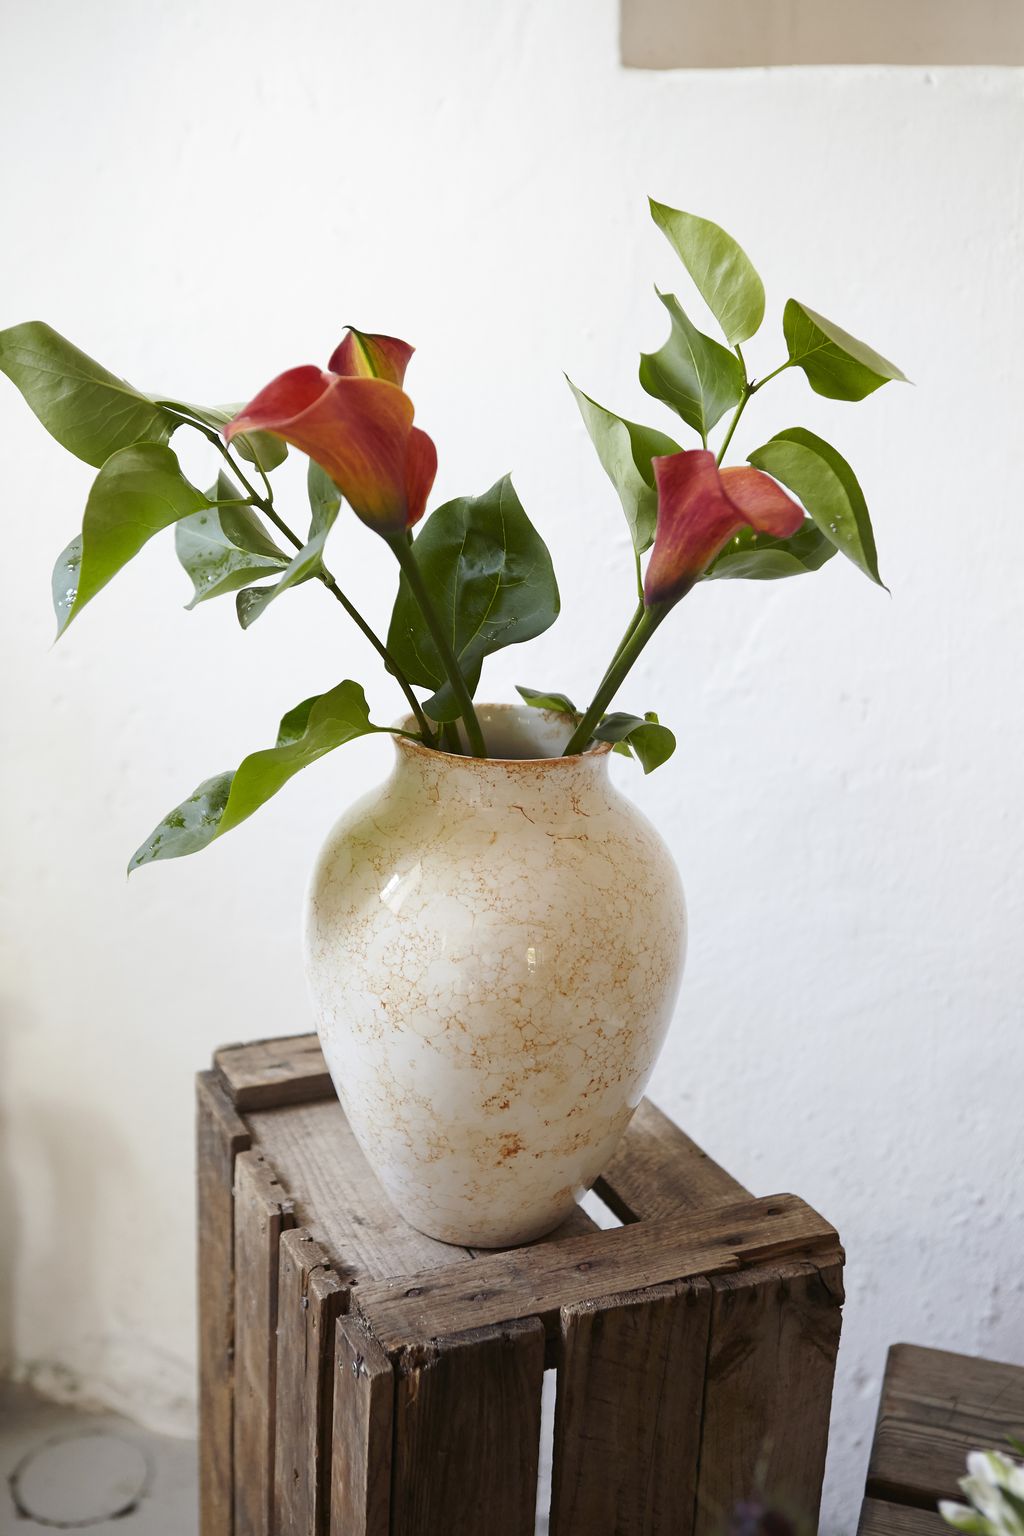 Knabstrup Keramik Vase Natura H 27 Cm, Weiß/Braun